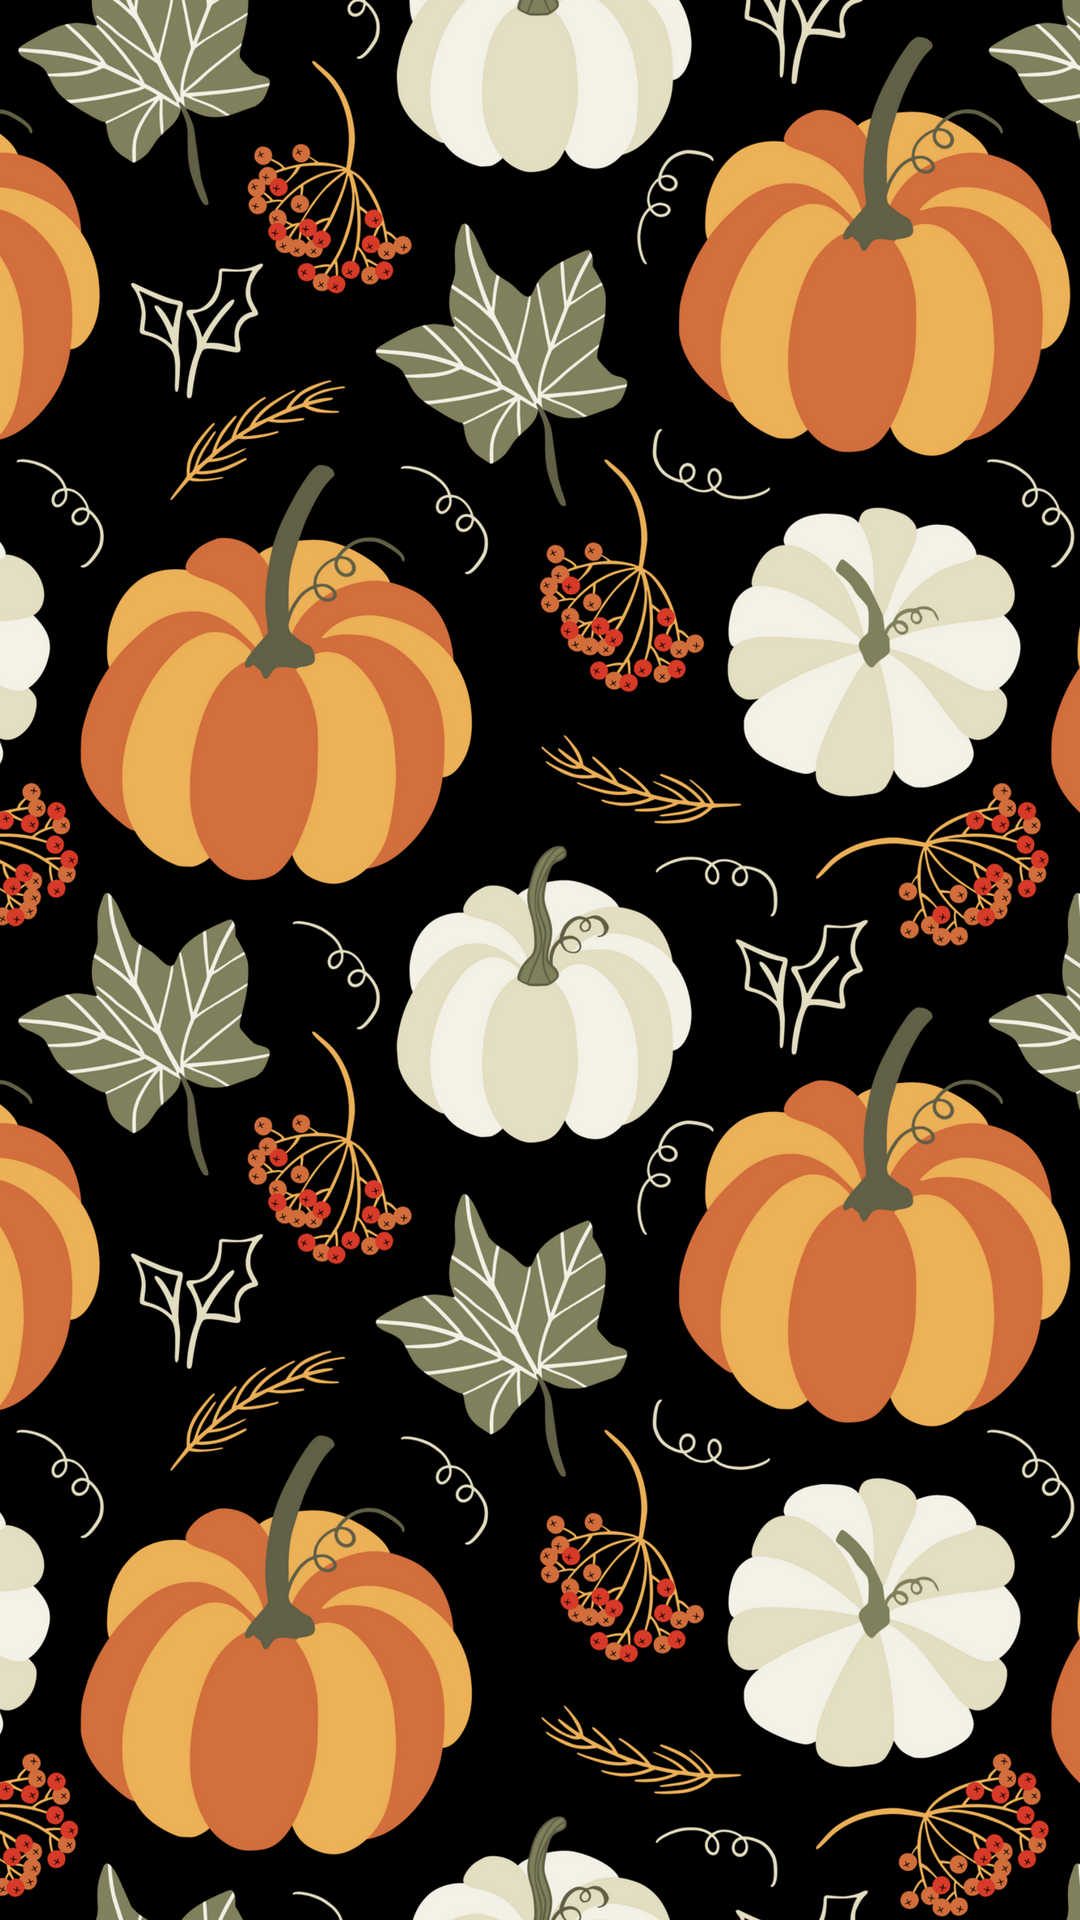 Cute Pumpkin Background Images  Free Download on Freepik